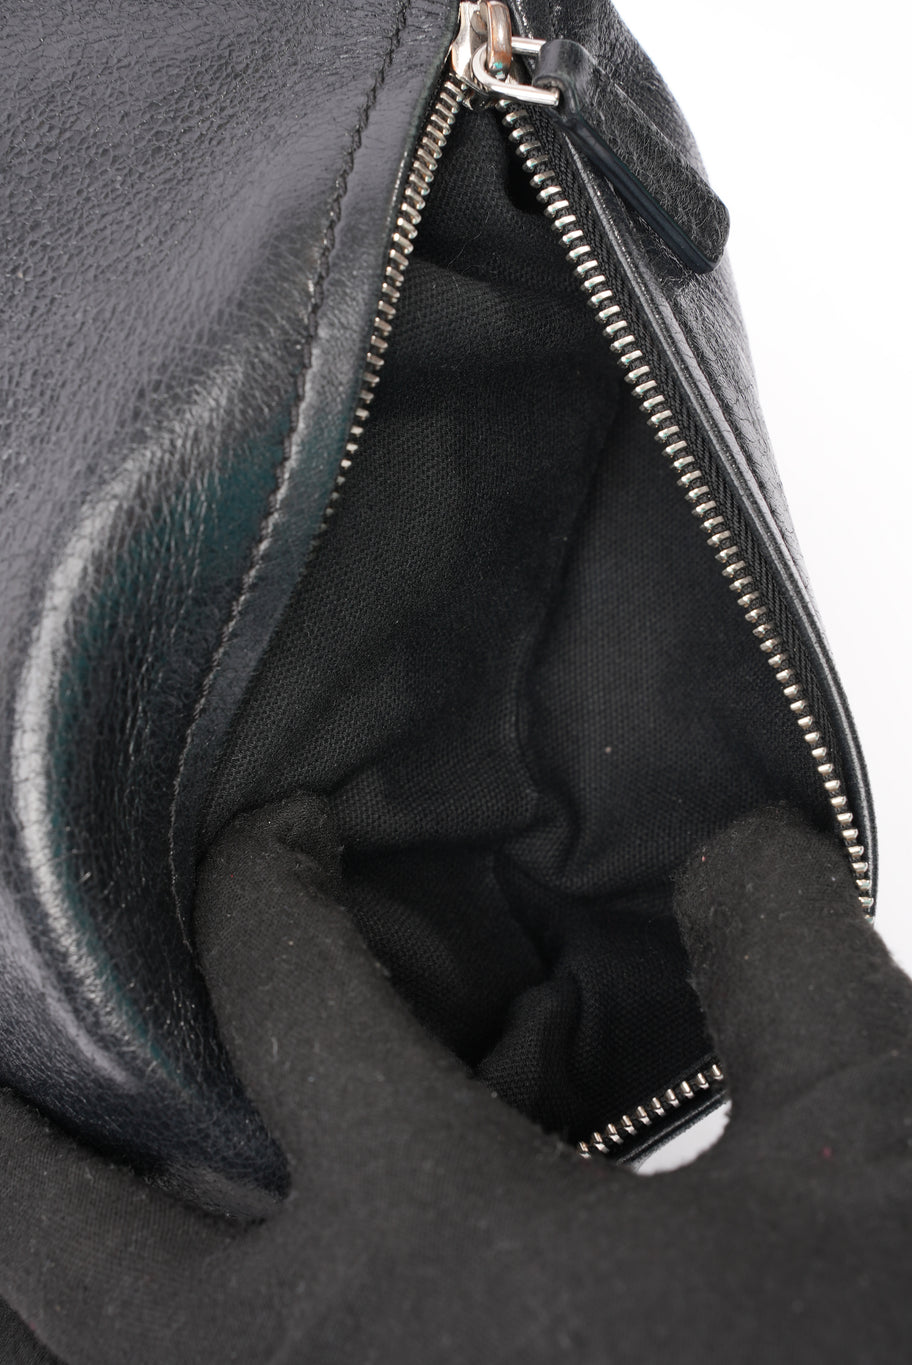 Pandora Bag Black Leather Small Image 8